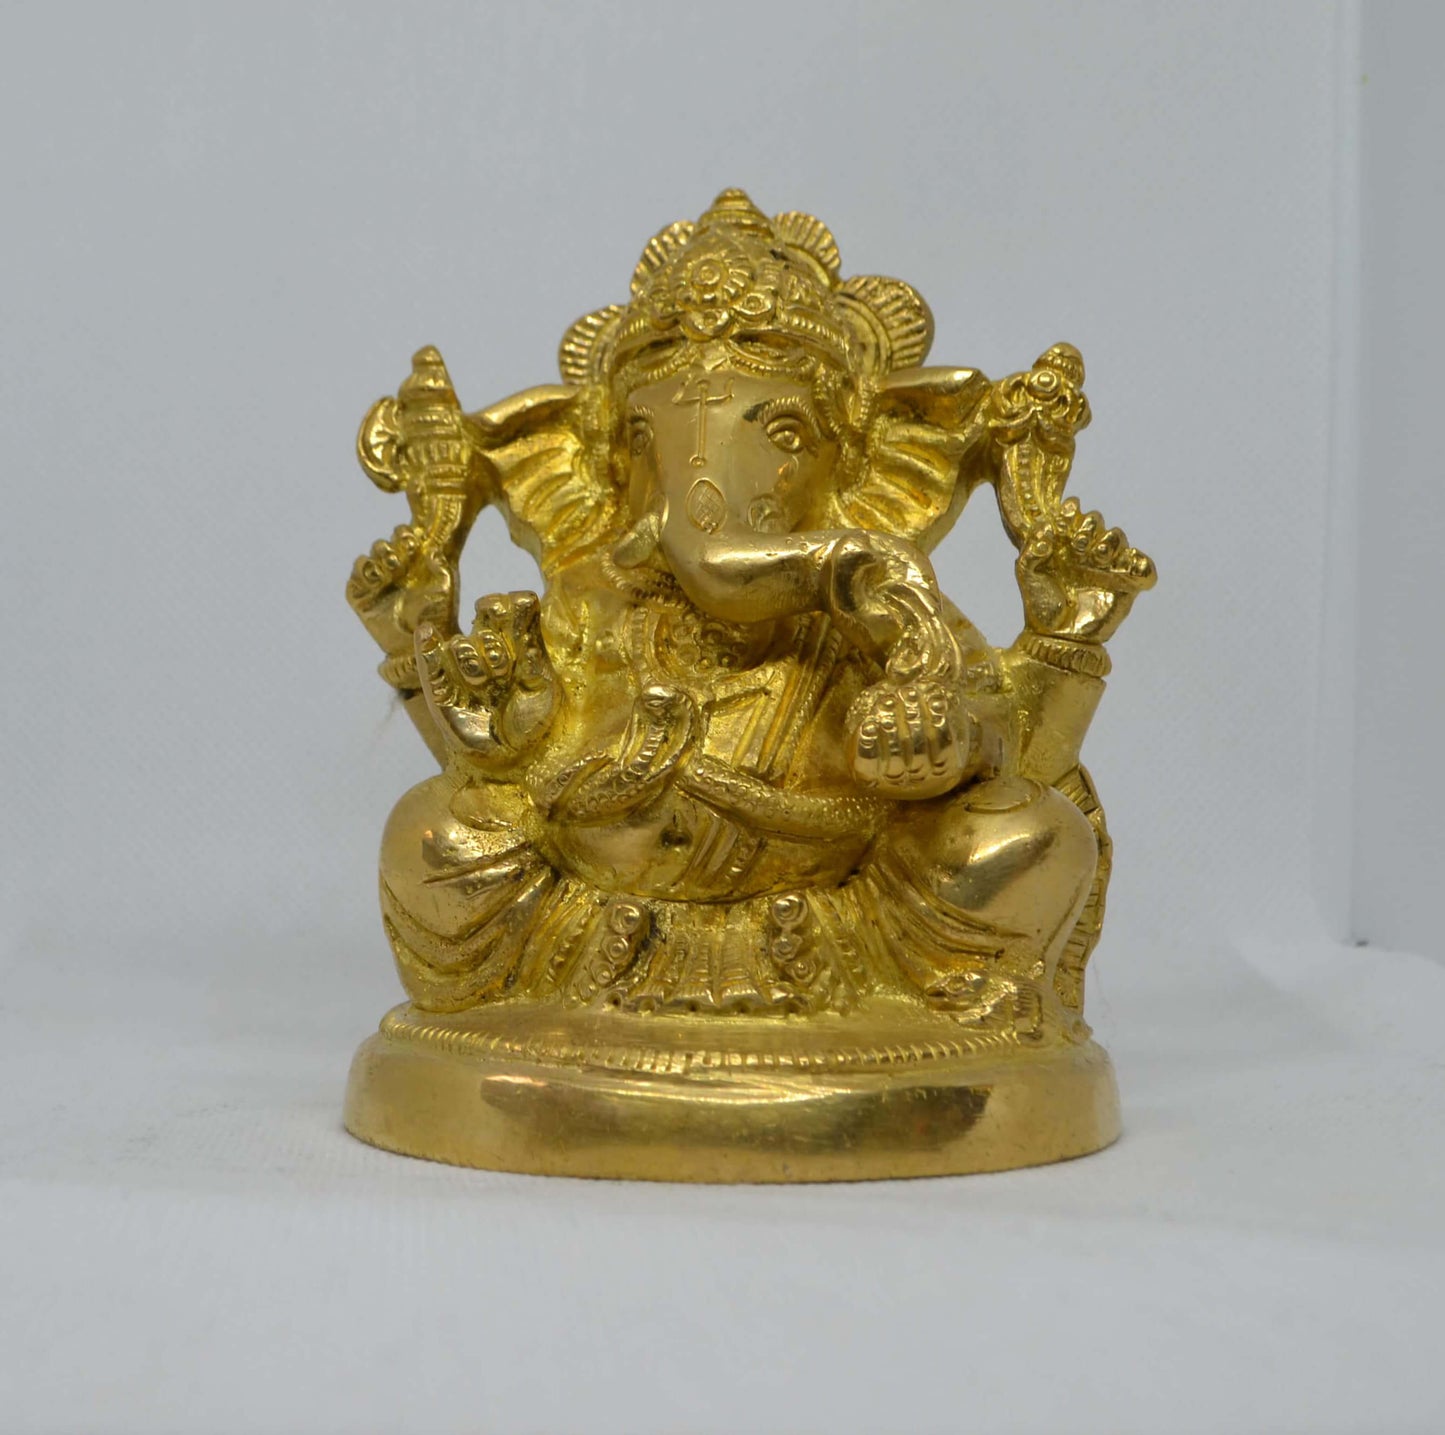 310-Ganesha